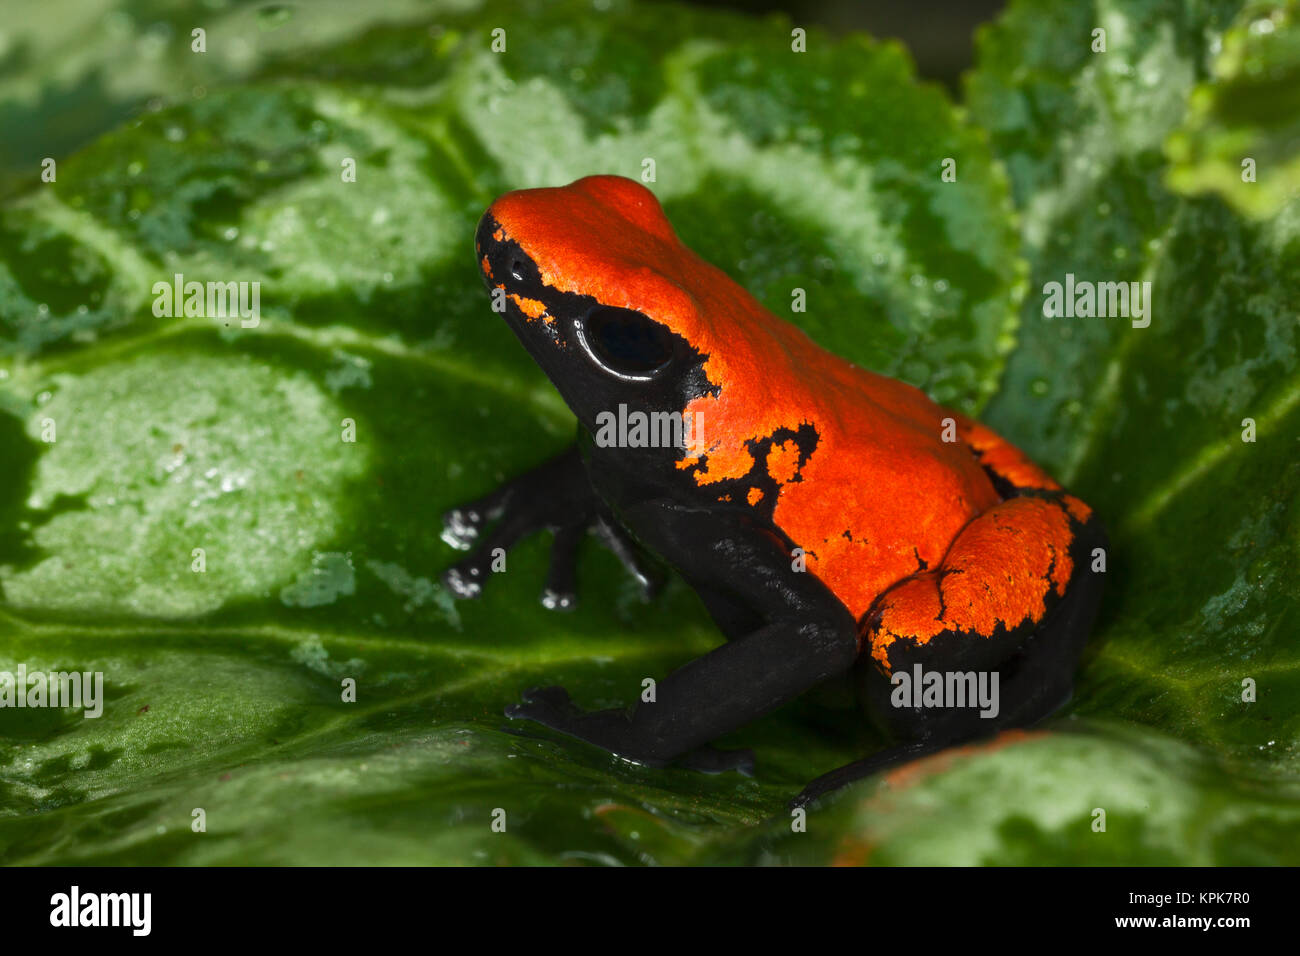 Splash-Backed Poison Frog (Dendrobates galactonotus) Stock Photo